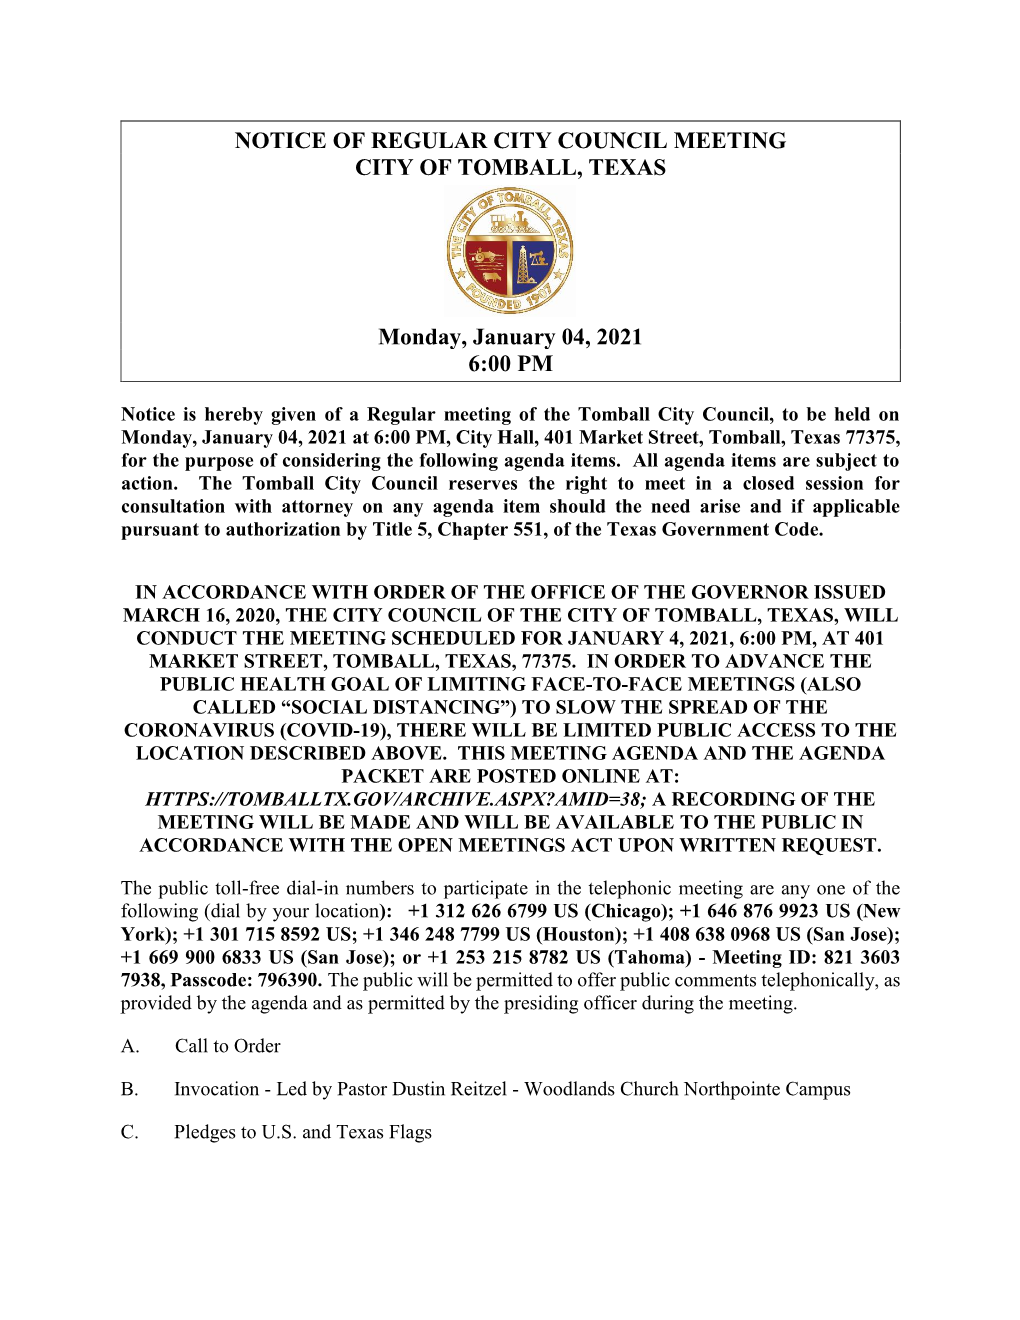 Notice of Regular City Council Meeting City of Tomball, Texas